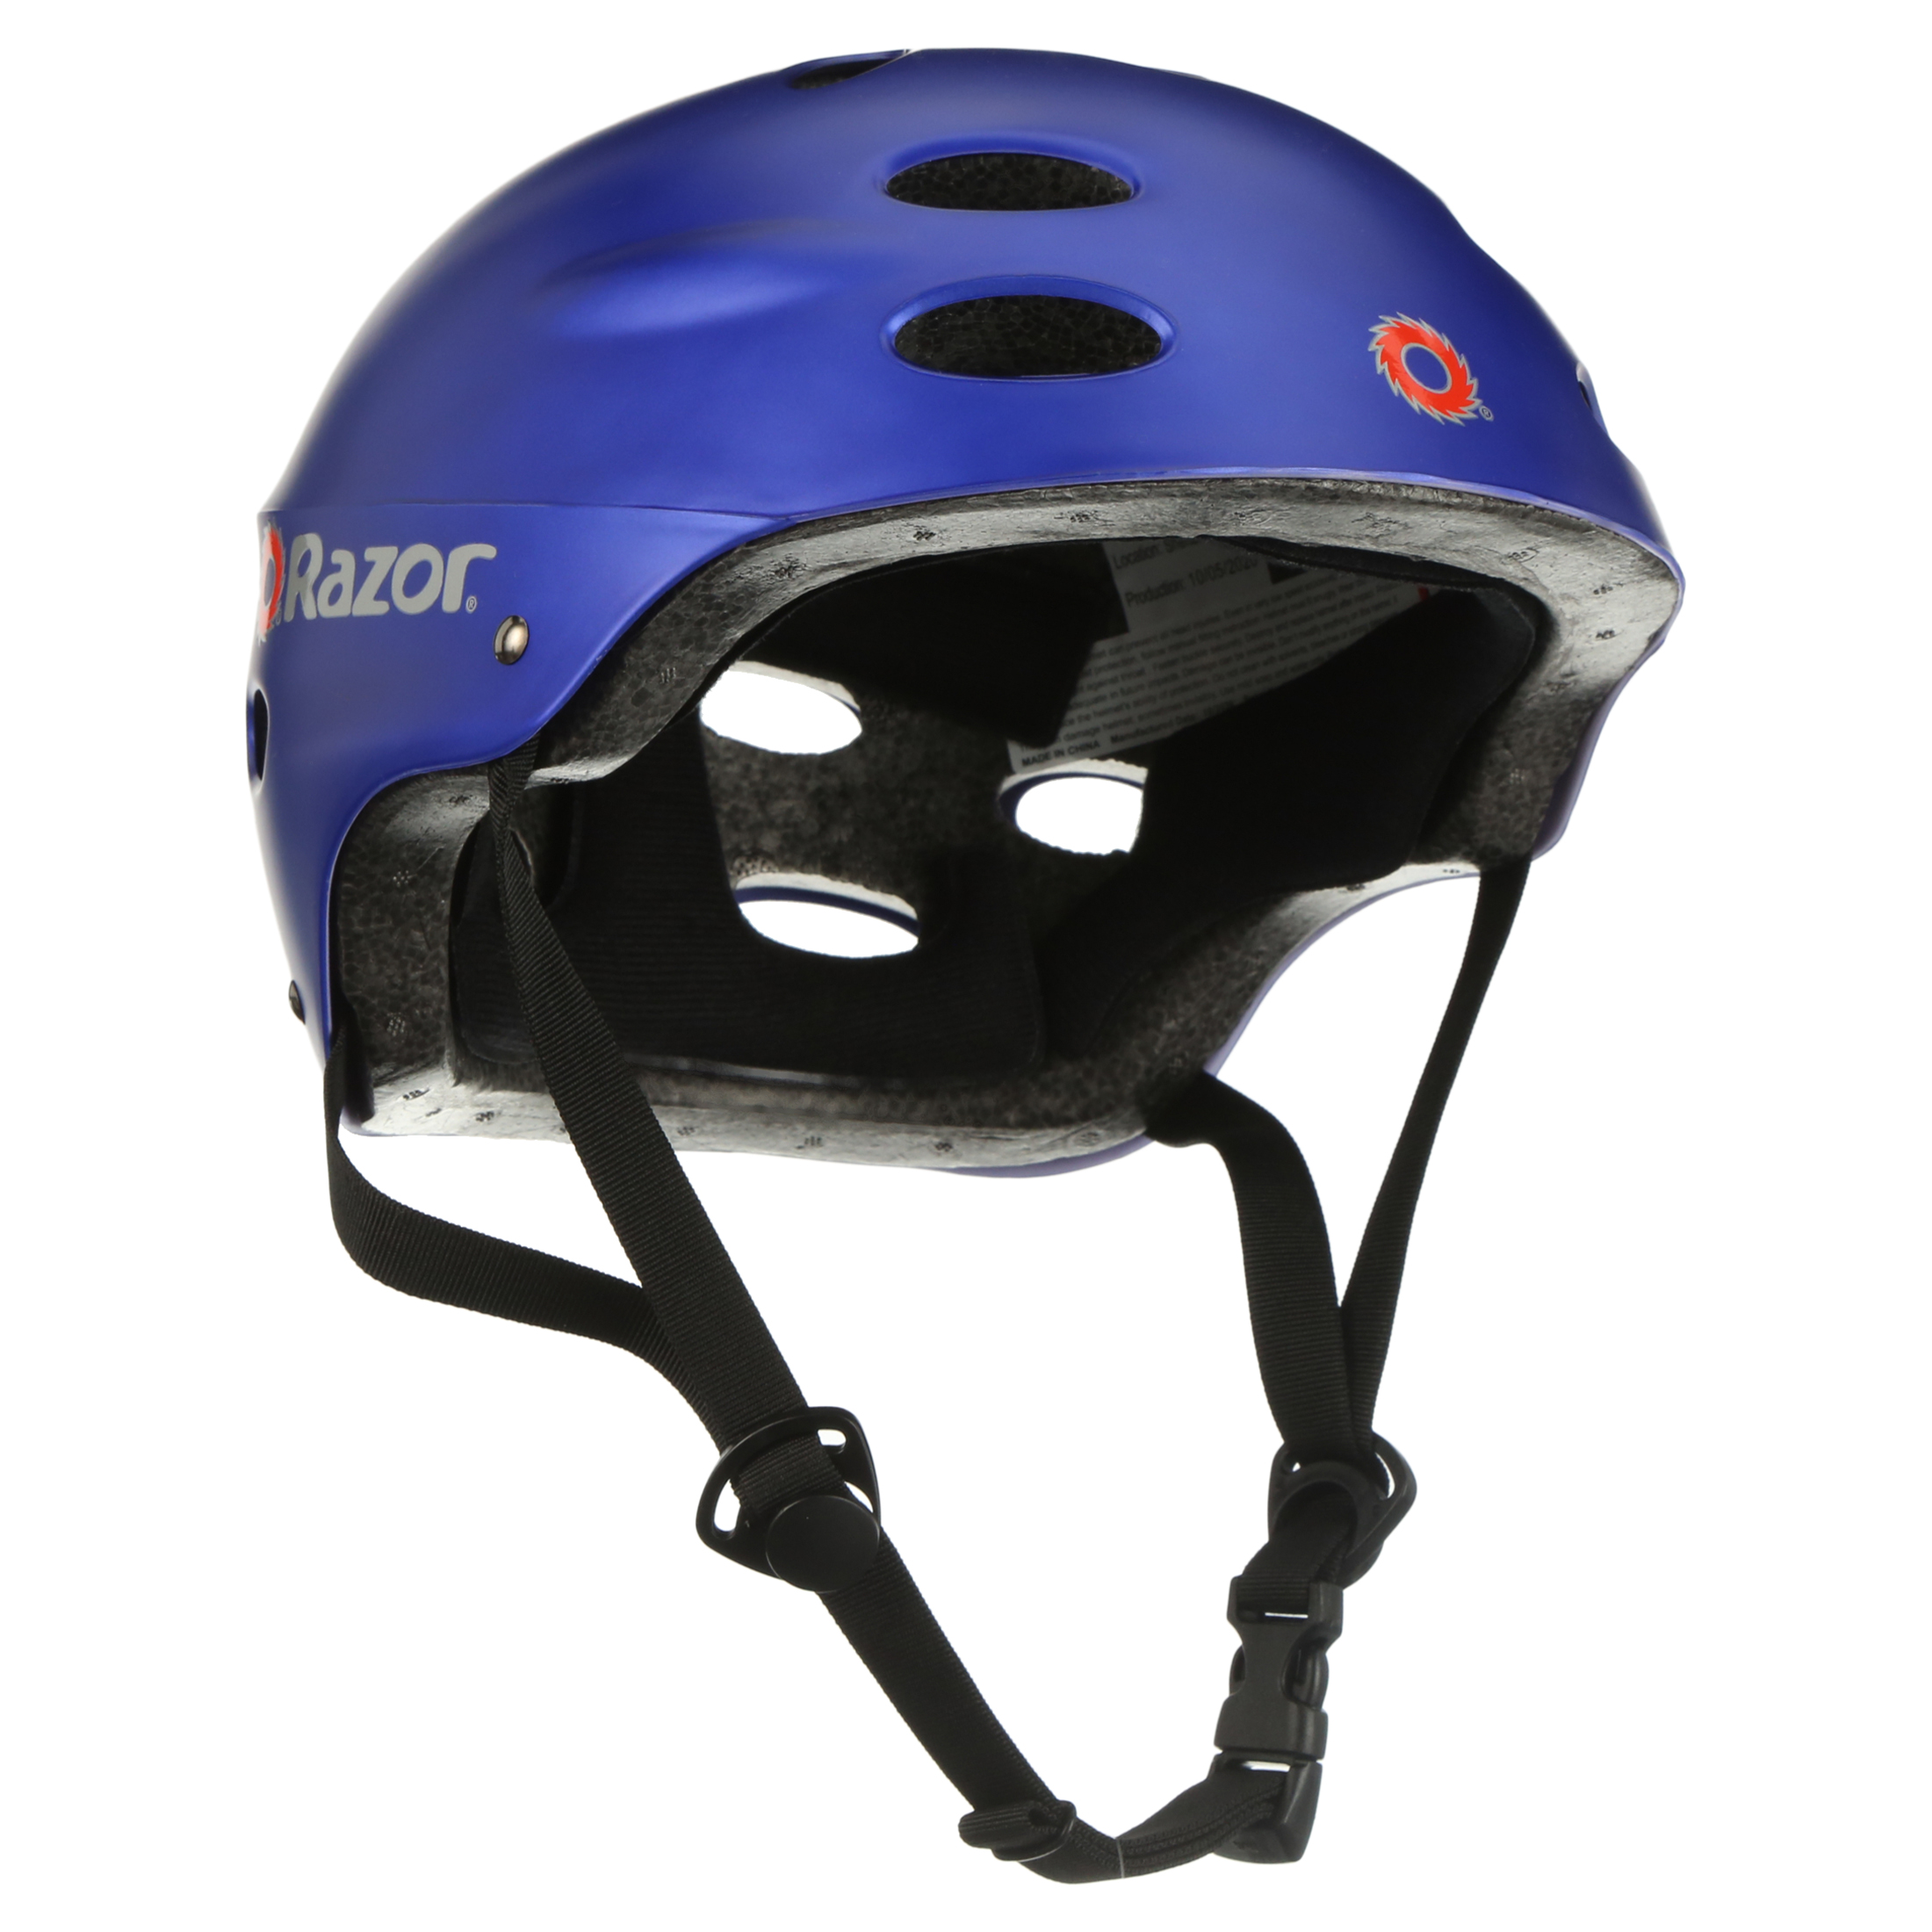 Razor V17 Multi-Sport Child's Helmet, Satin Blue - image 5 of 10